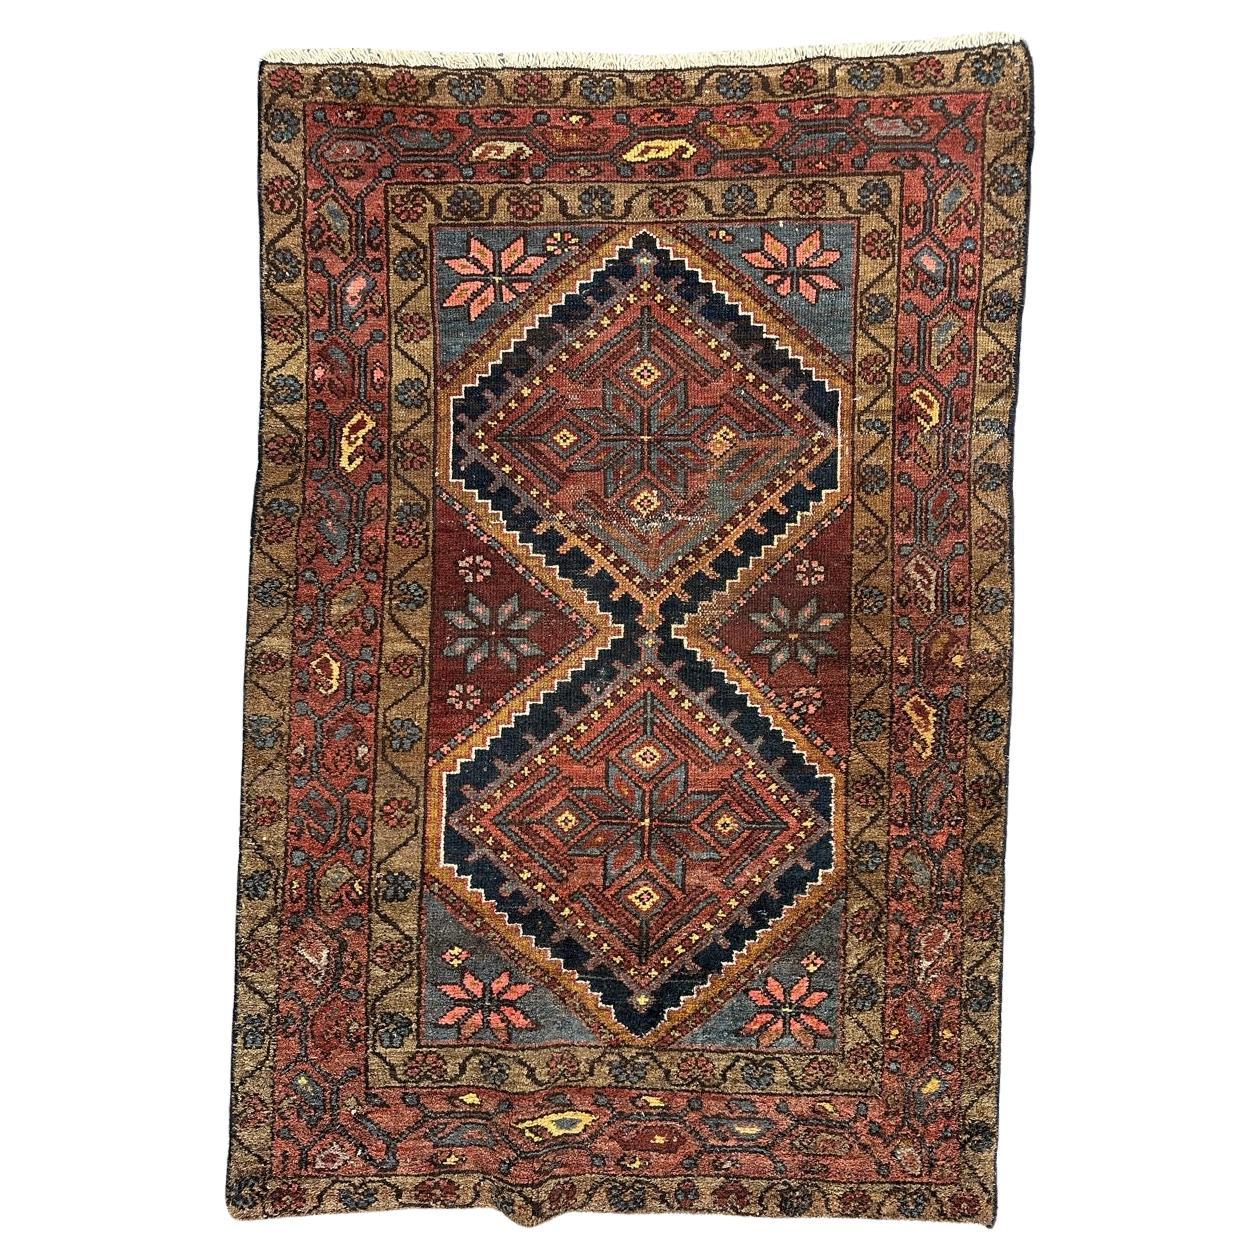 Bobyrug’s mid century tribal Kurdish rug 